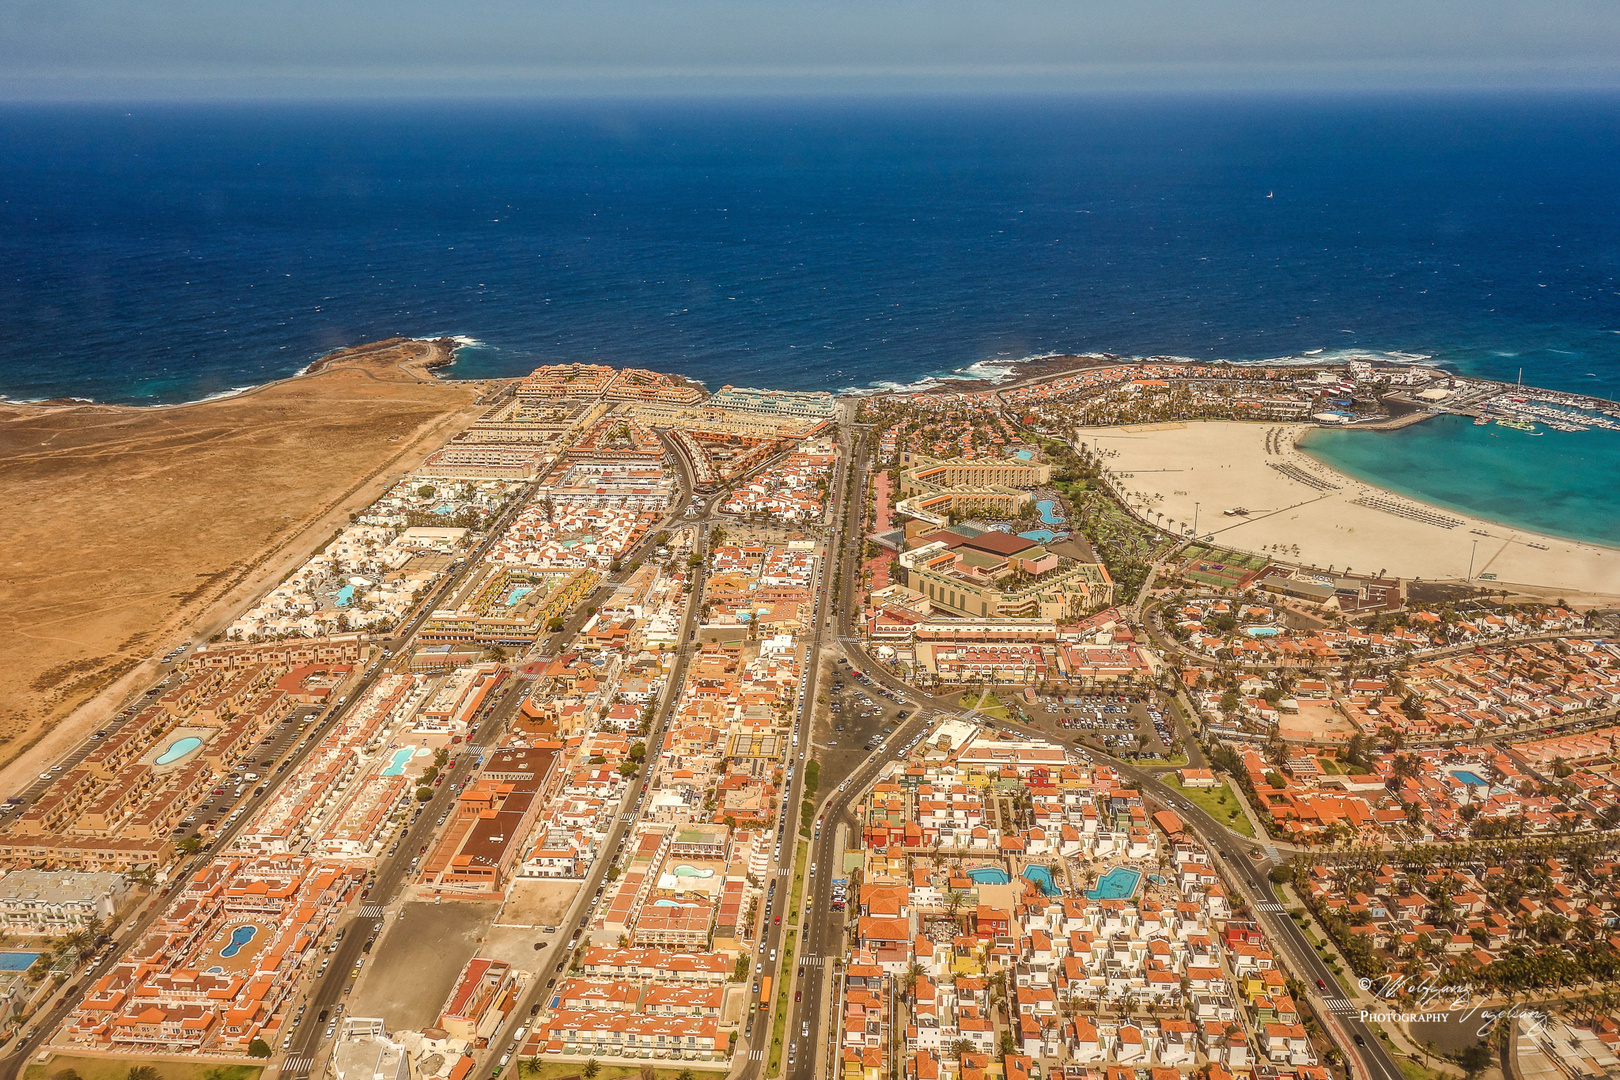 Caleta de Fuste (Fuerteventura)